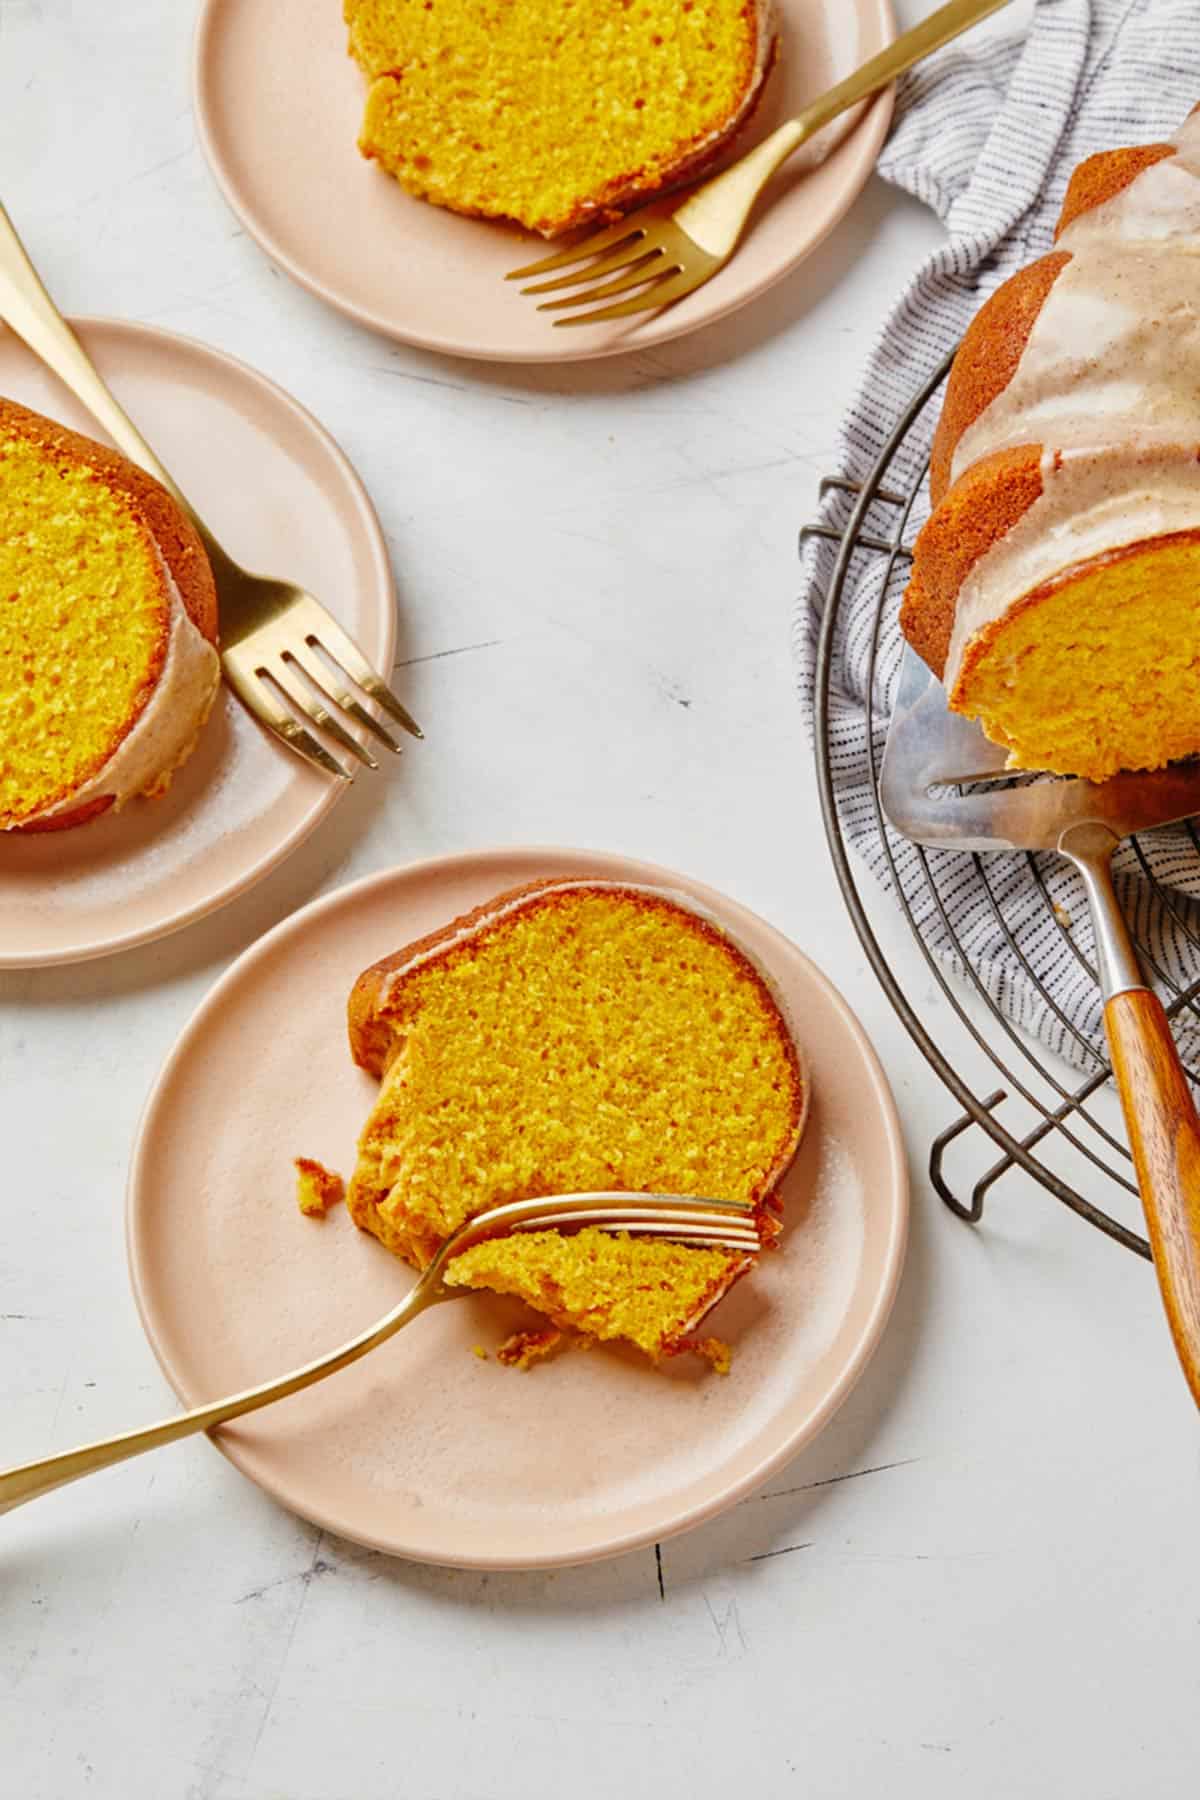 Pumpkin bundt cake sliced on plates with forks on the table.